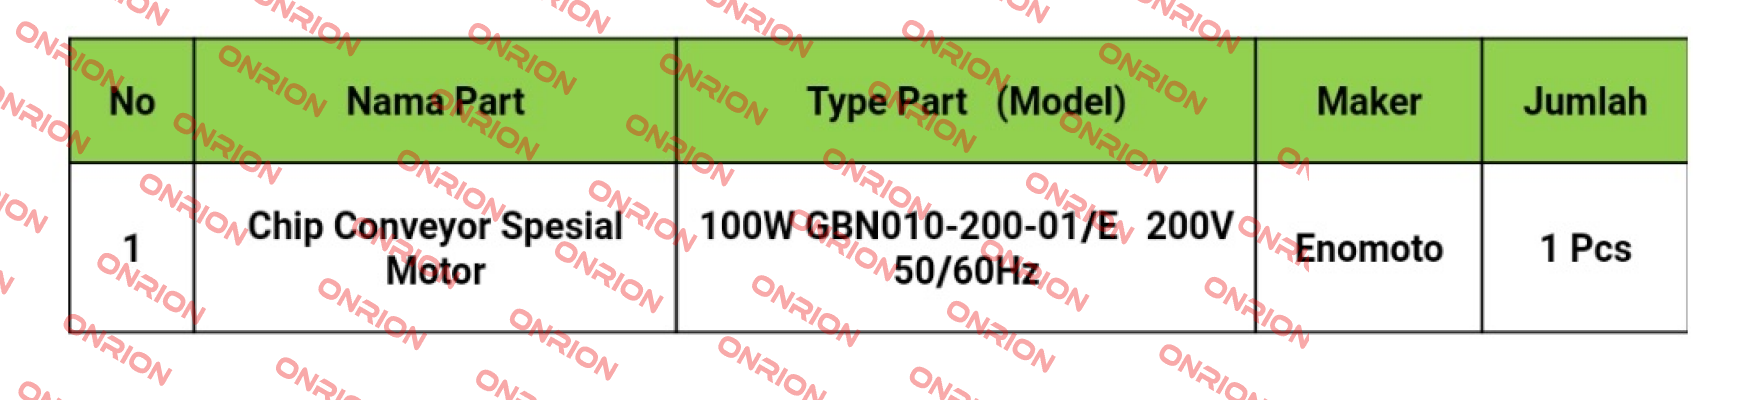 100W GBN 010-200-01/E   Enomoto Micro Pump